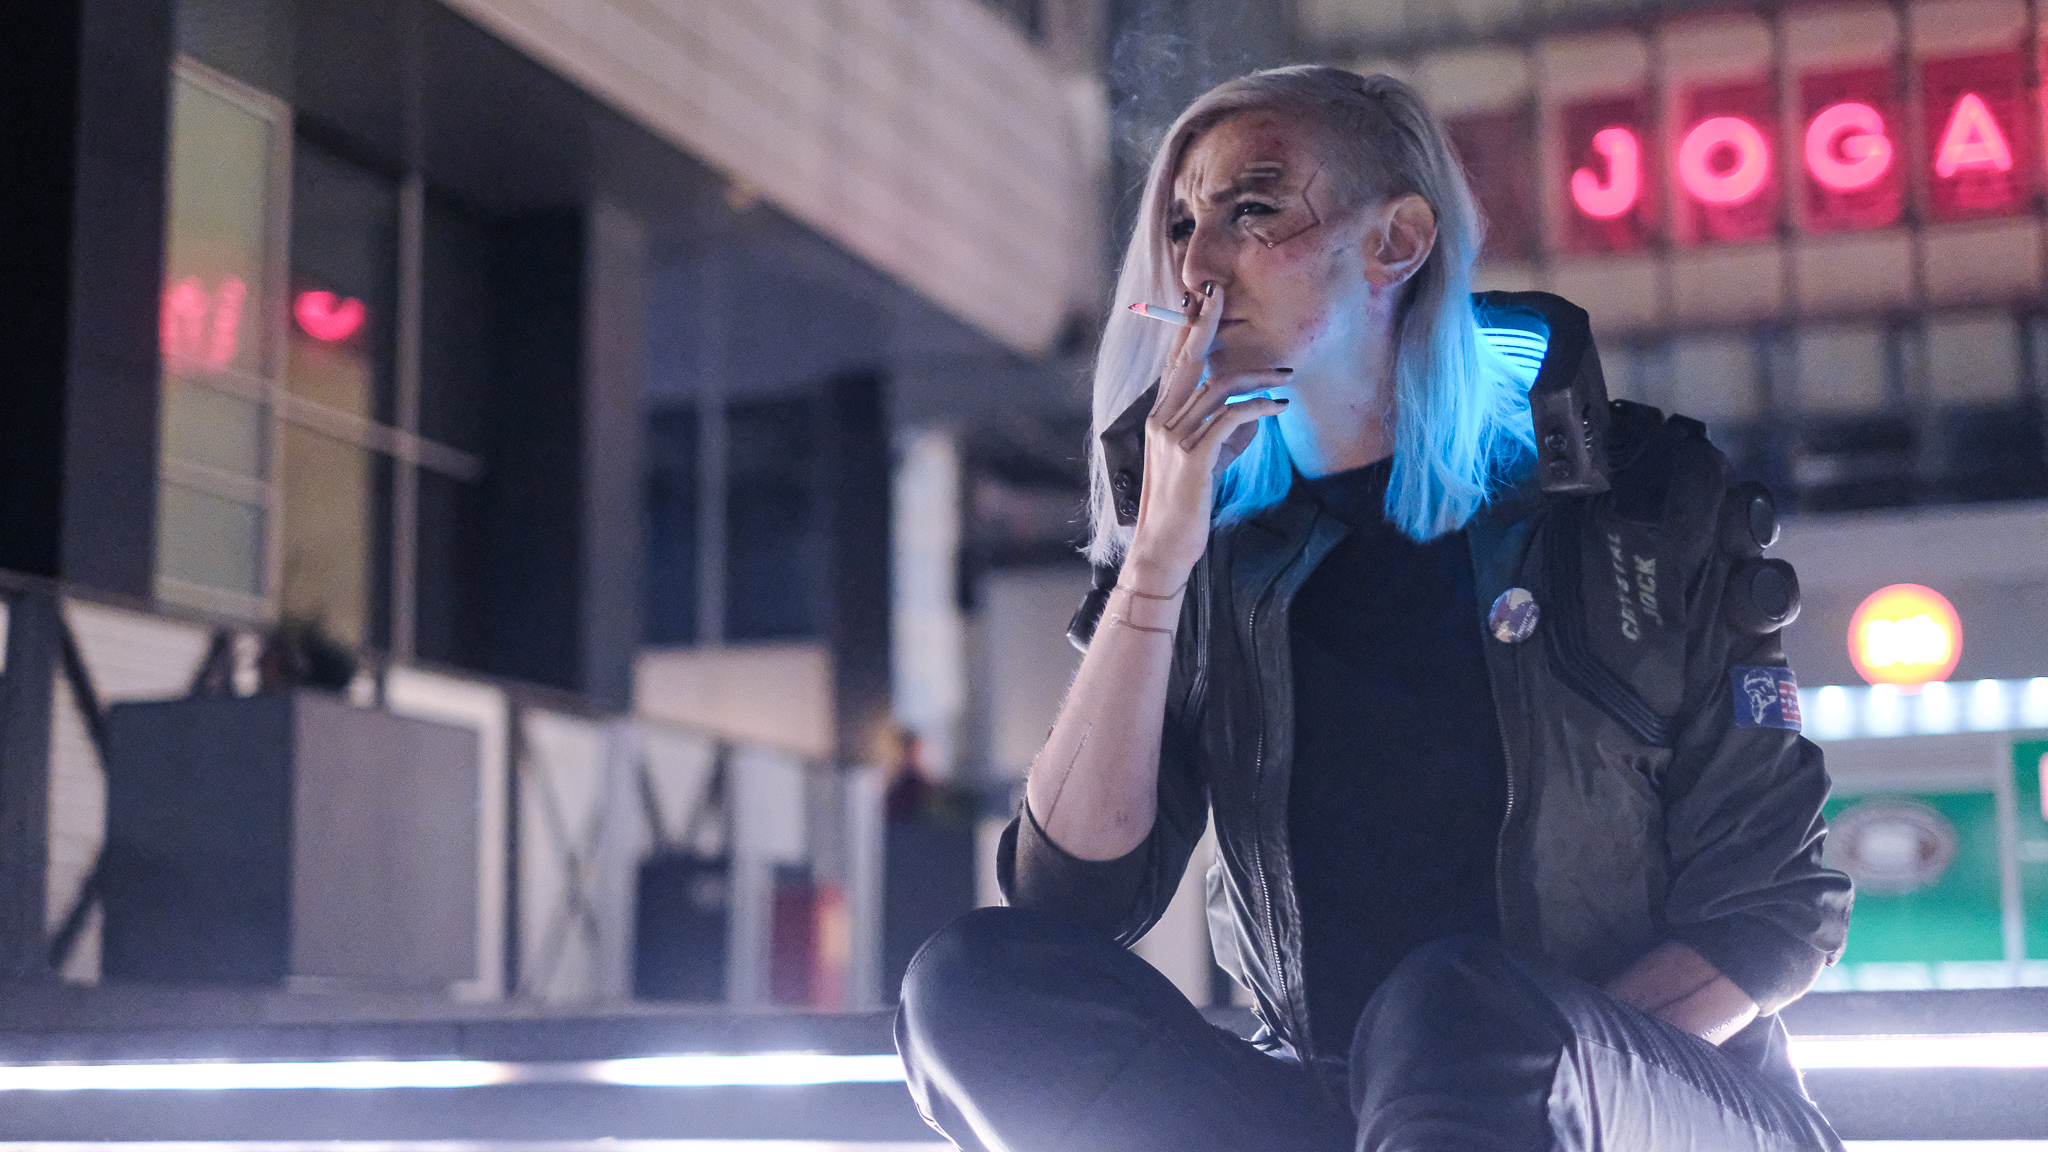 Cyberpunk 2077 - V Cosplay - alzbeta trojanova smoking a cigarette while sitting down